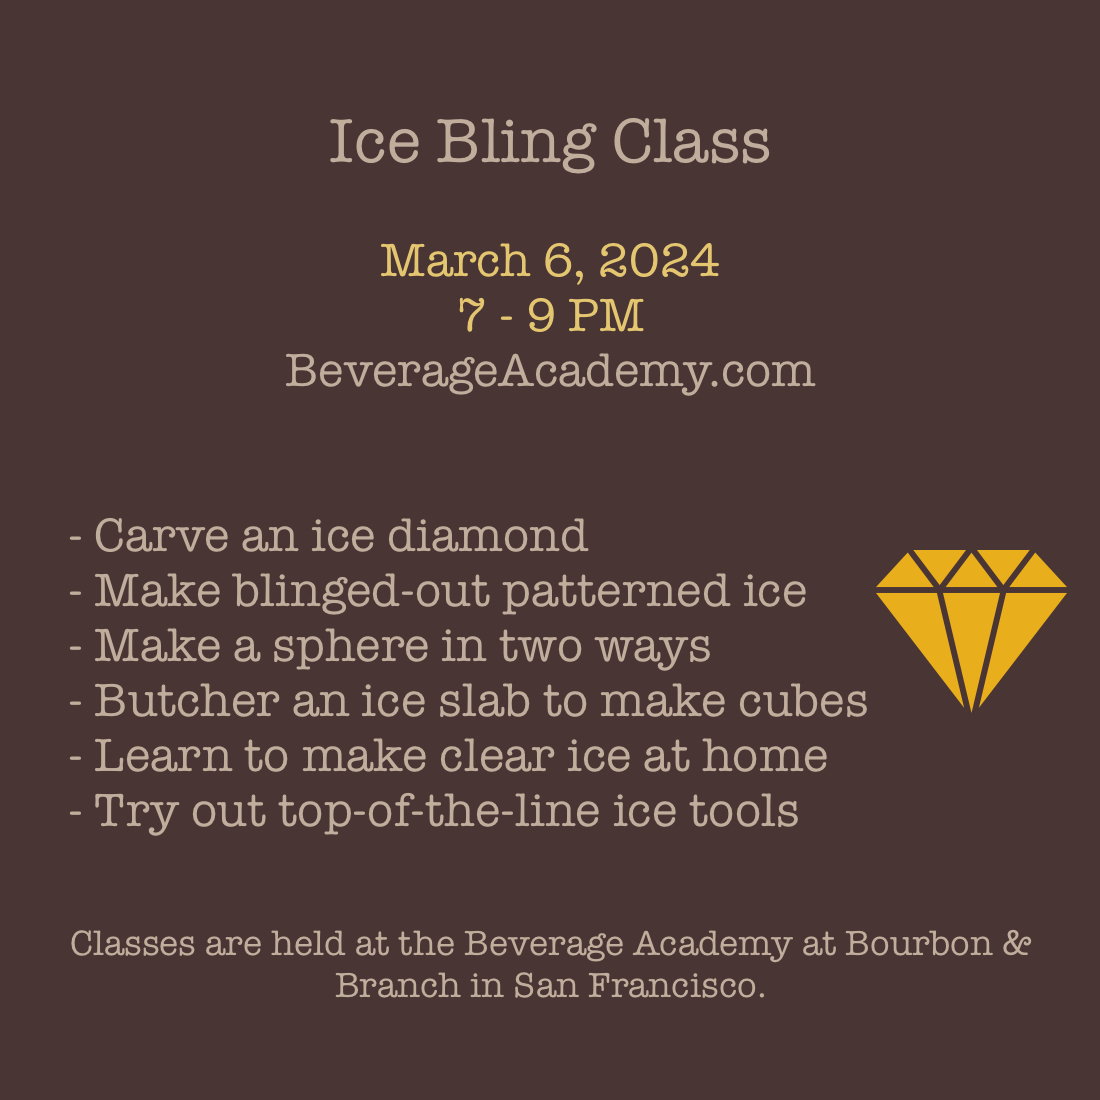 Ice and Amaro classes in San Francisco this March! alcademics.com/event-calendar…